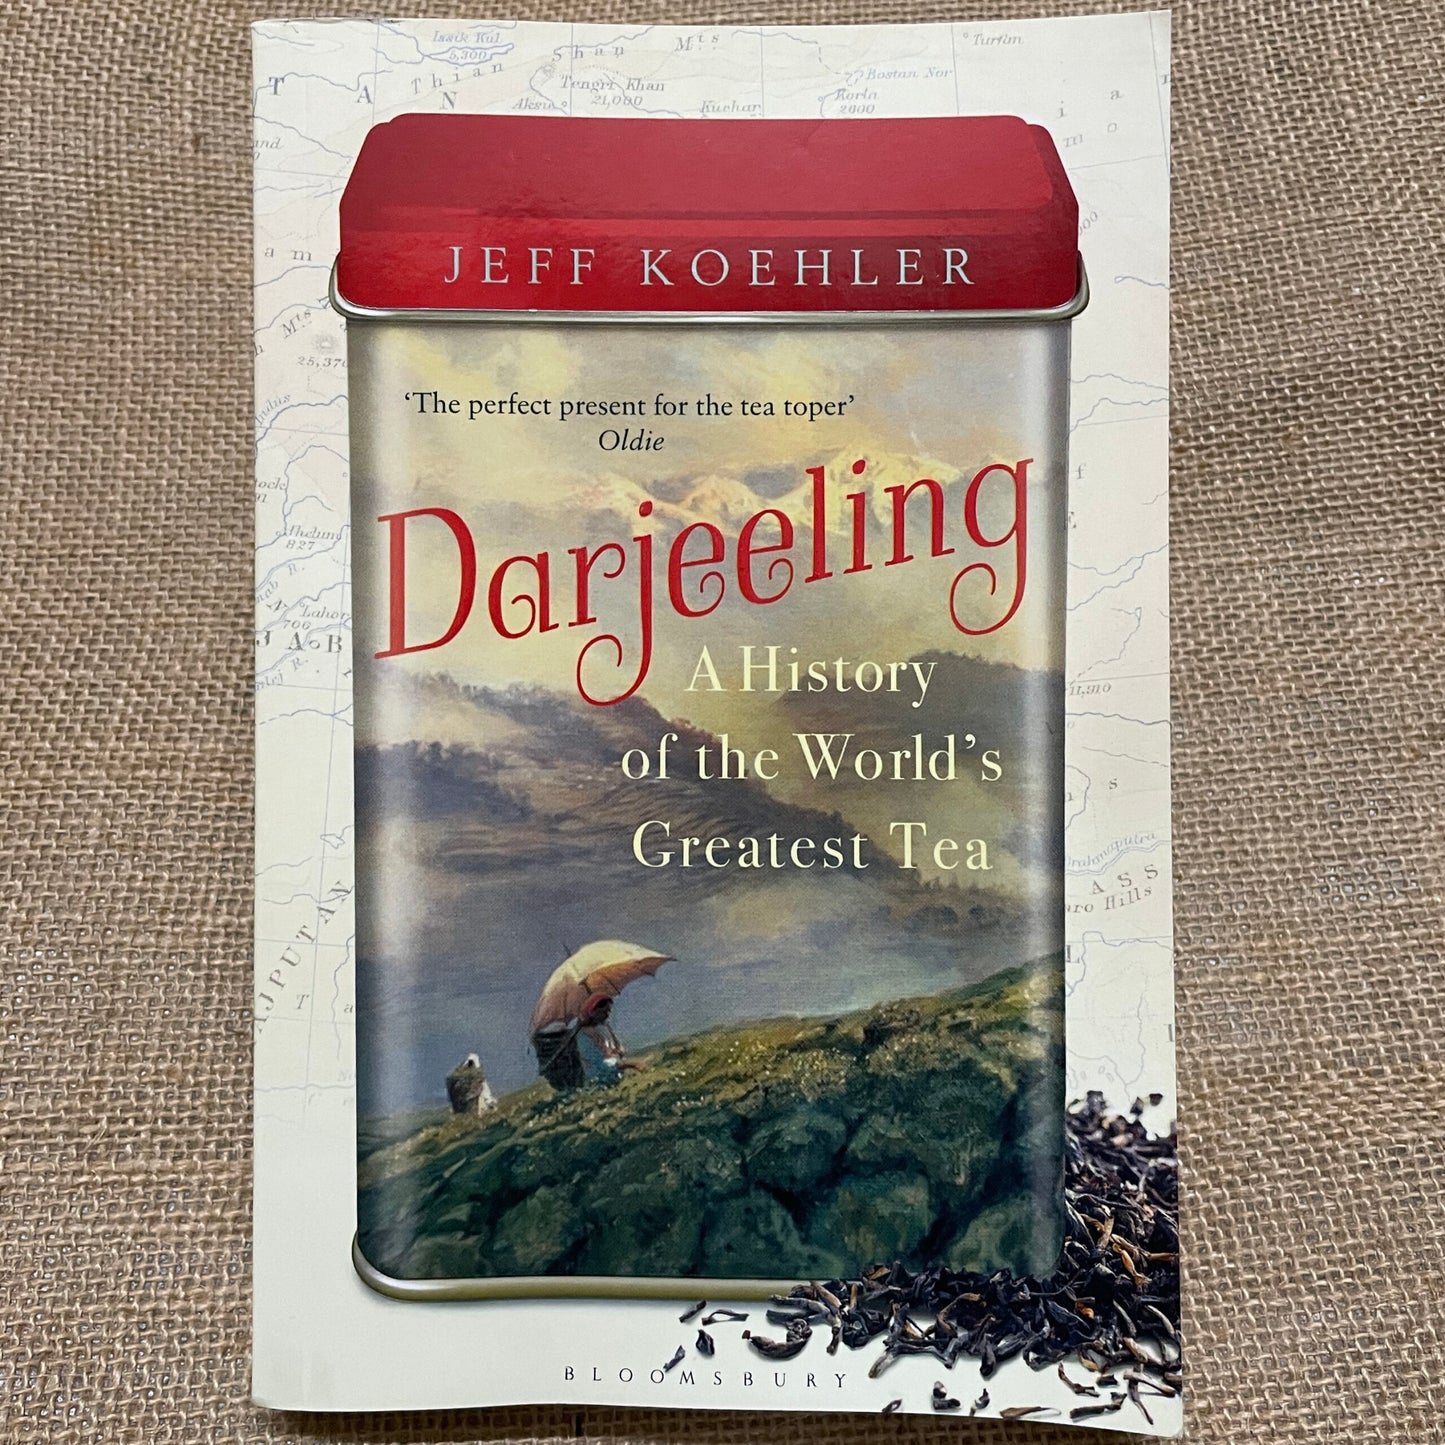 Darjeeling: A History of the World's Greatest Tea - Jeff Koehler